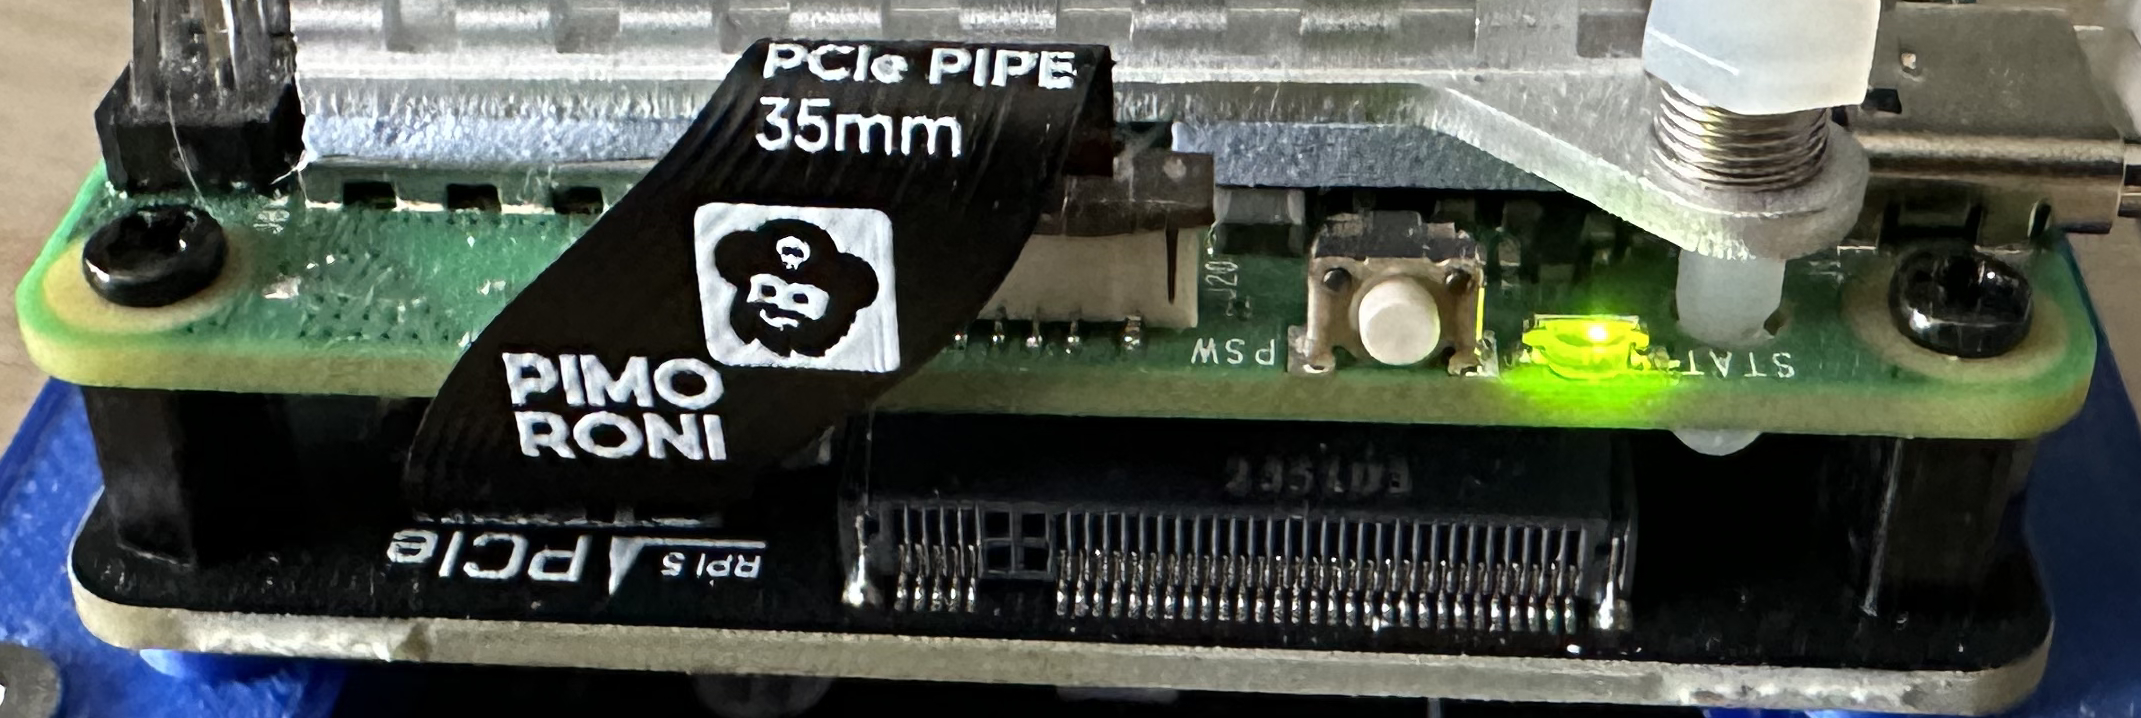 NVMe Base on Raspberry Pi